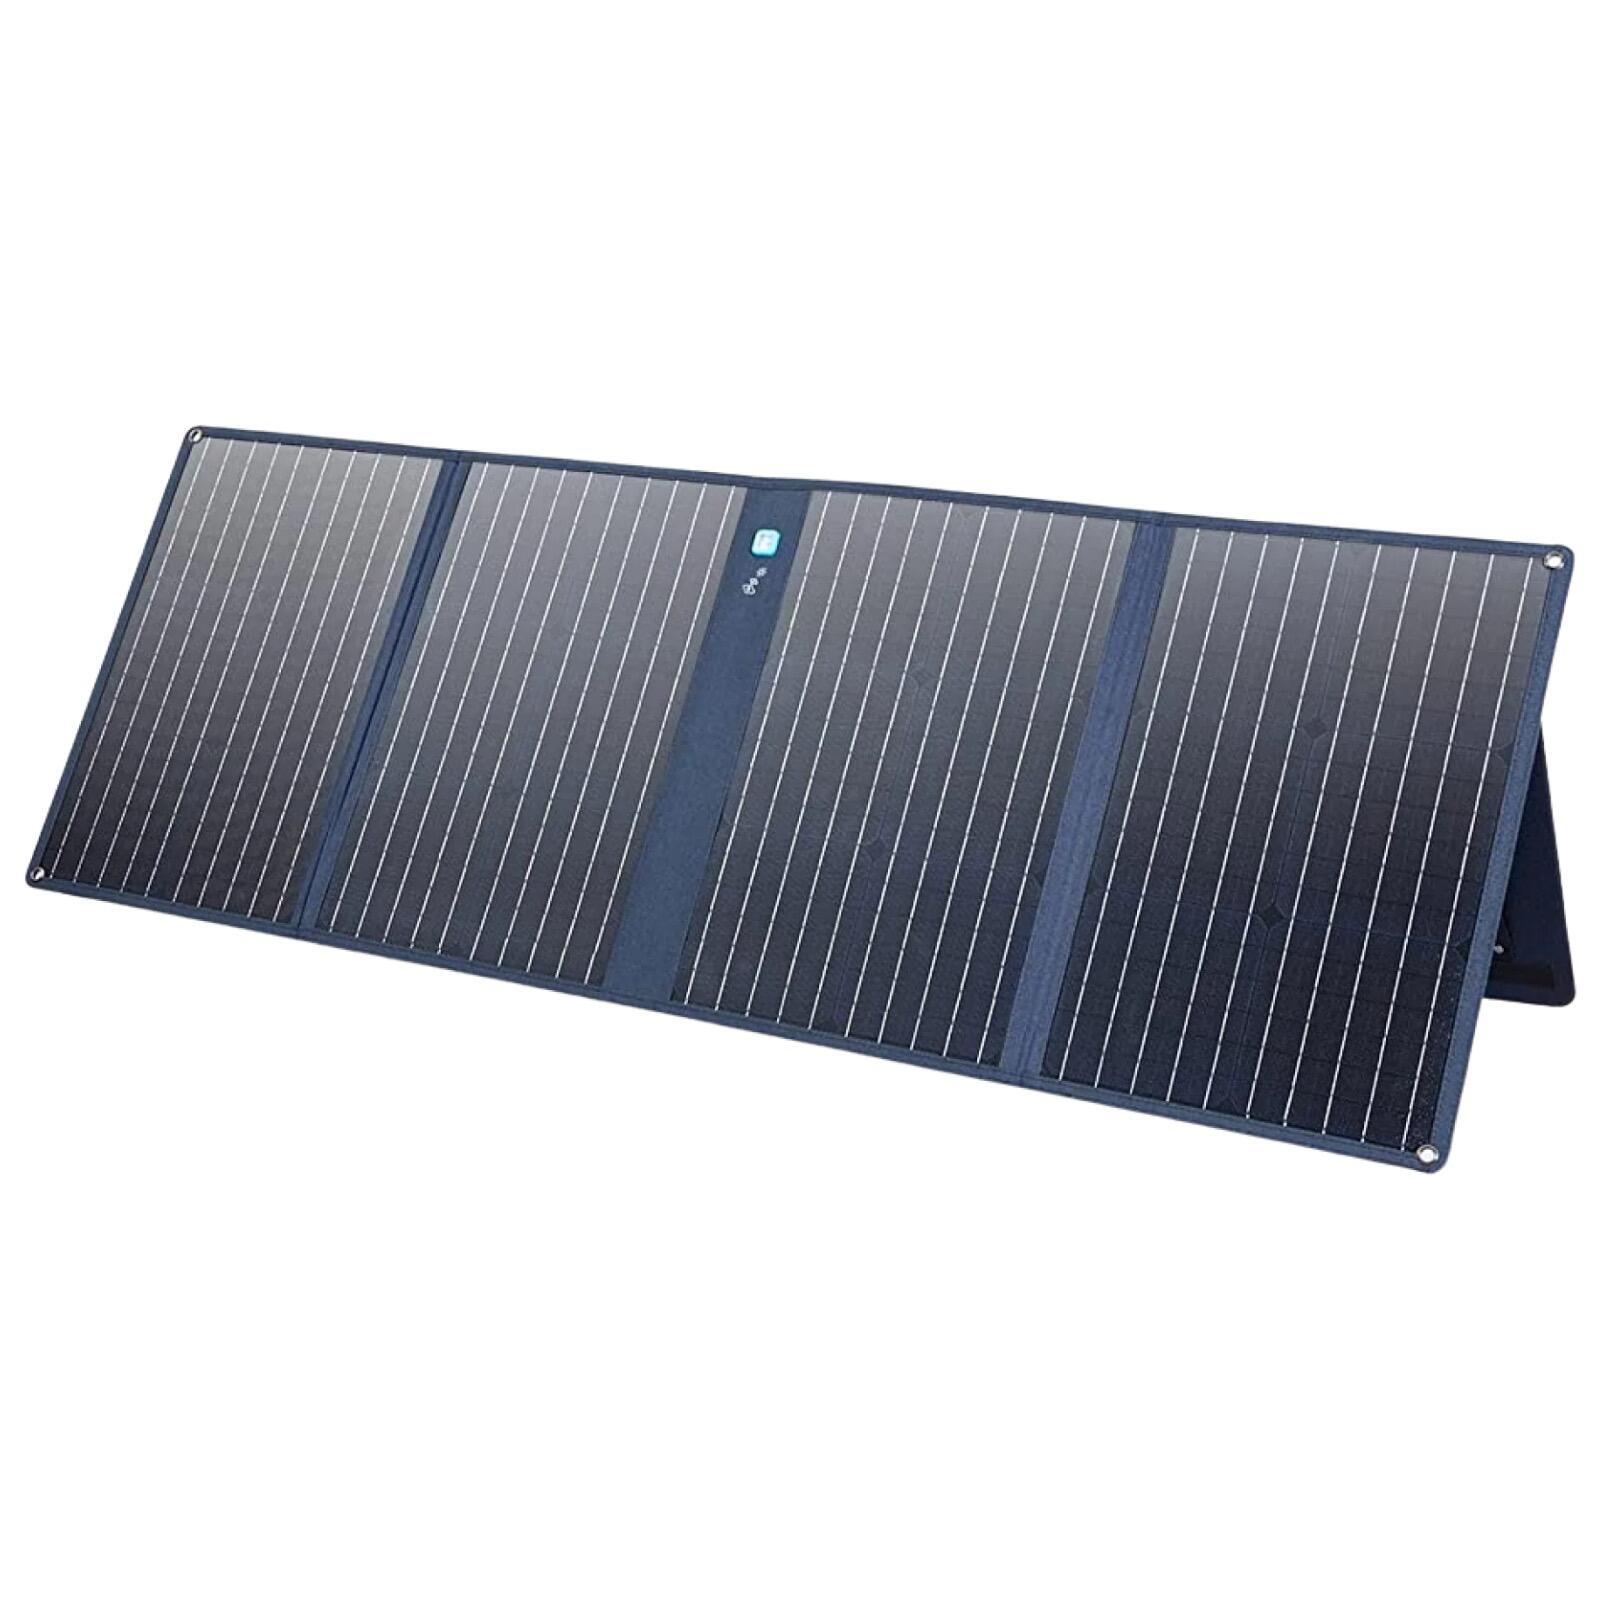 Anker 625 Solar Panel 100w for PowerHouse Power Station 521 535 & 757 Batteries